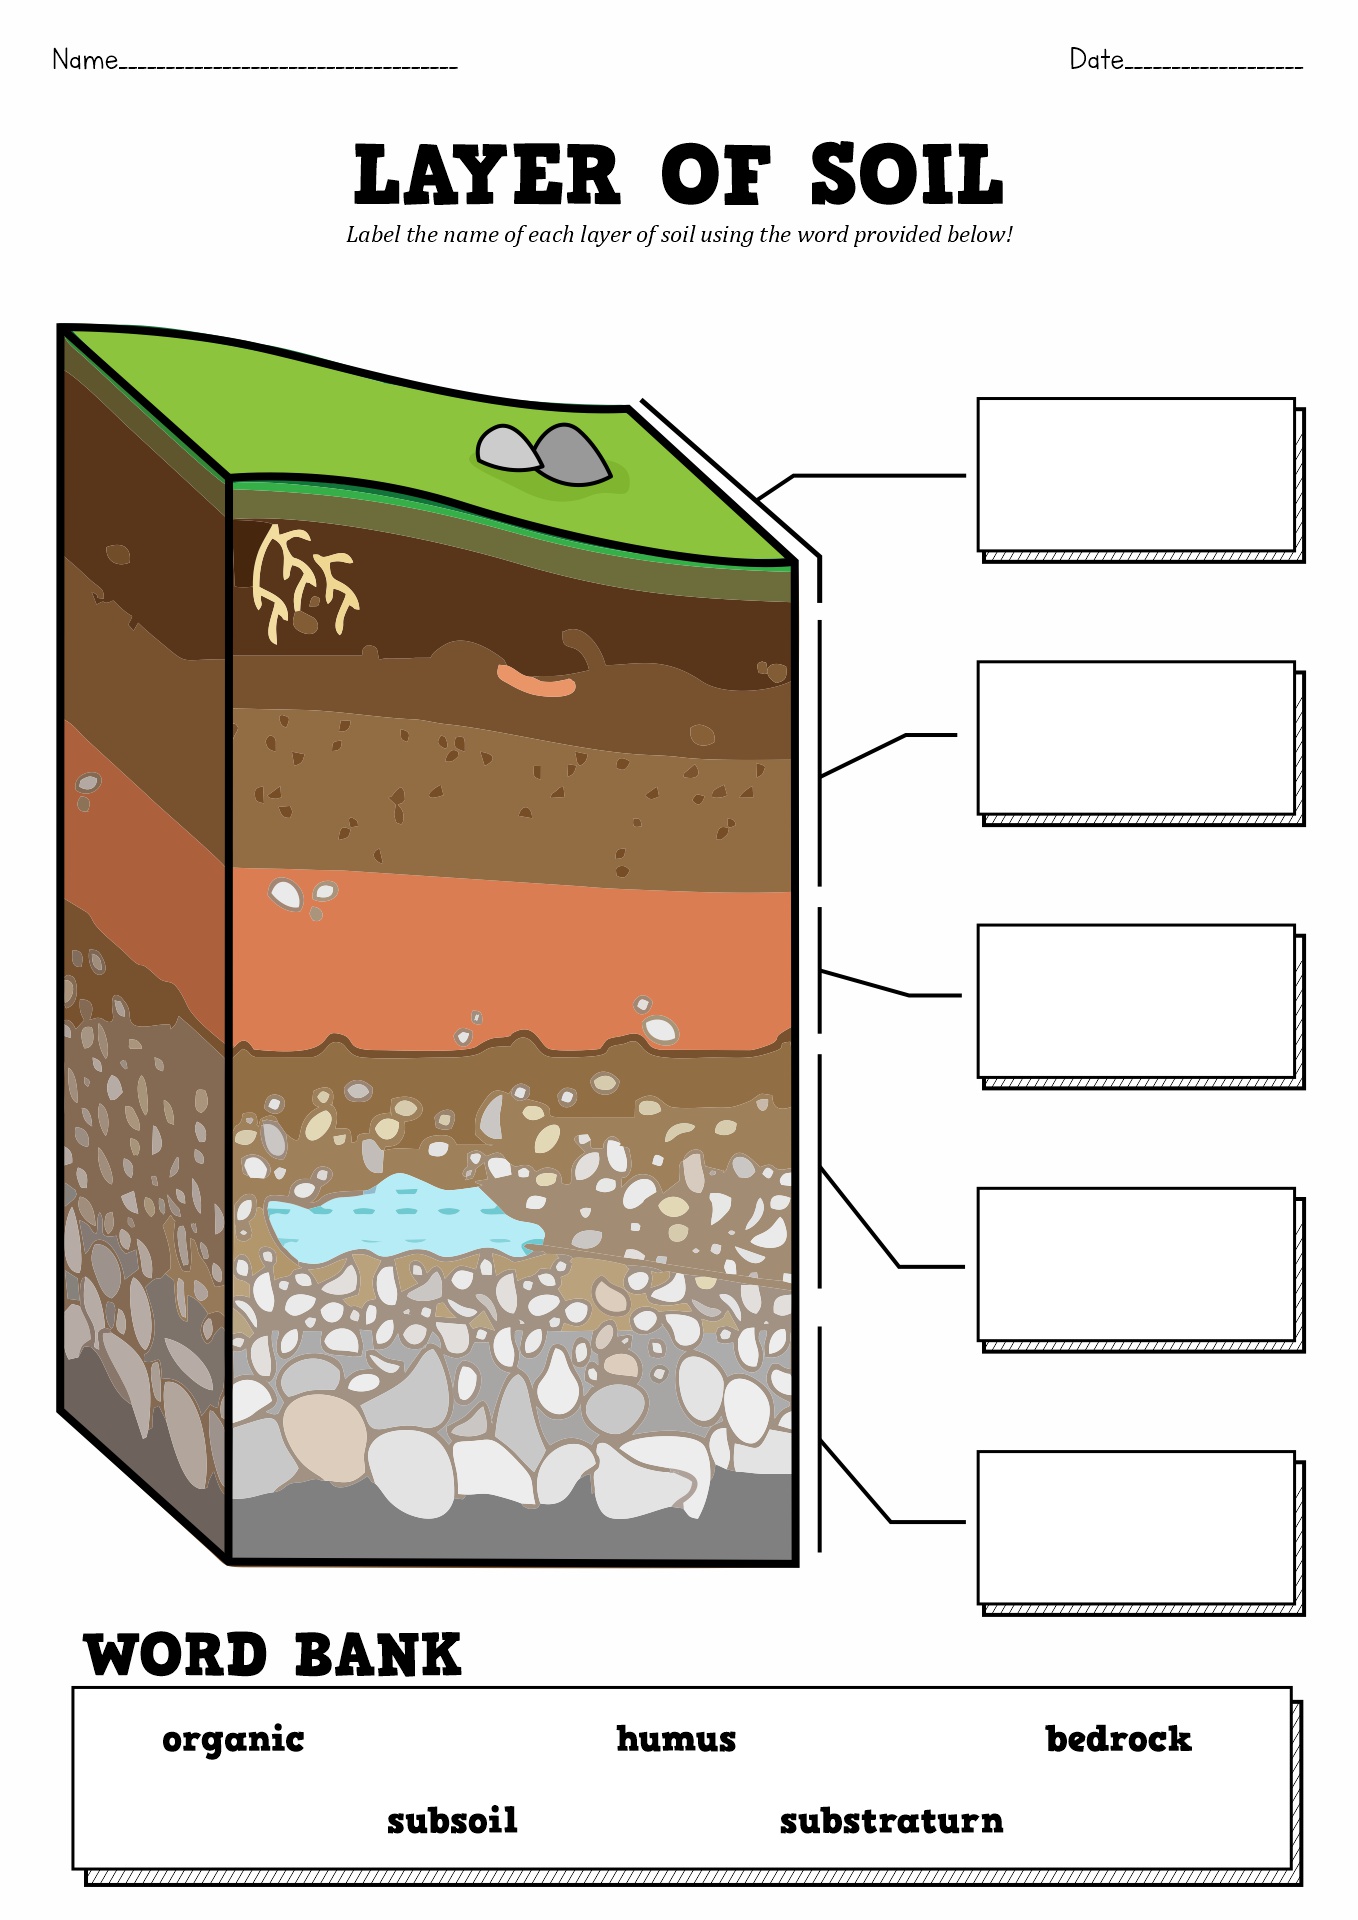 Label Soil Layers Diagram